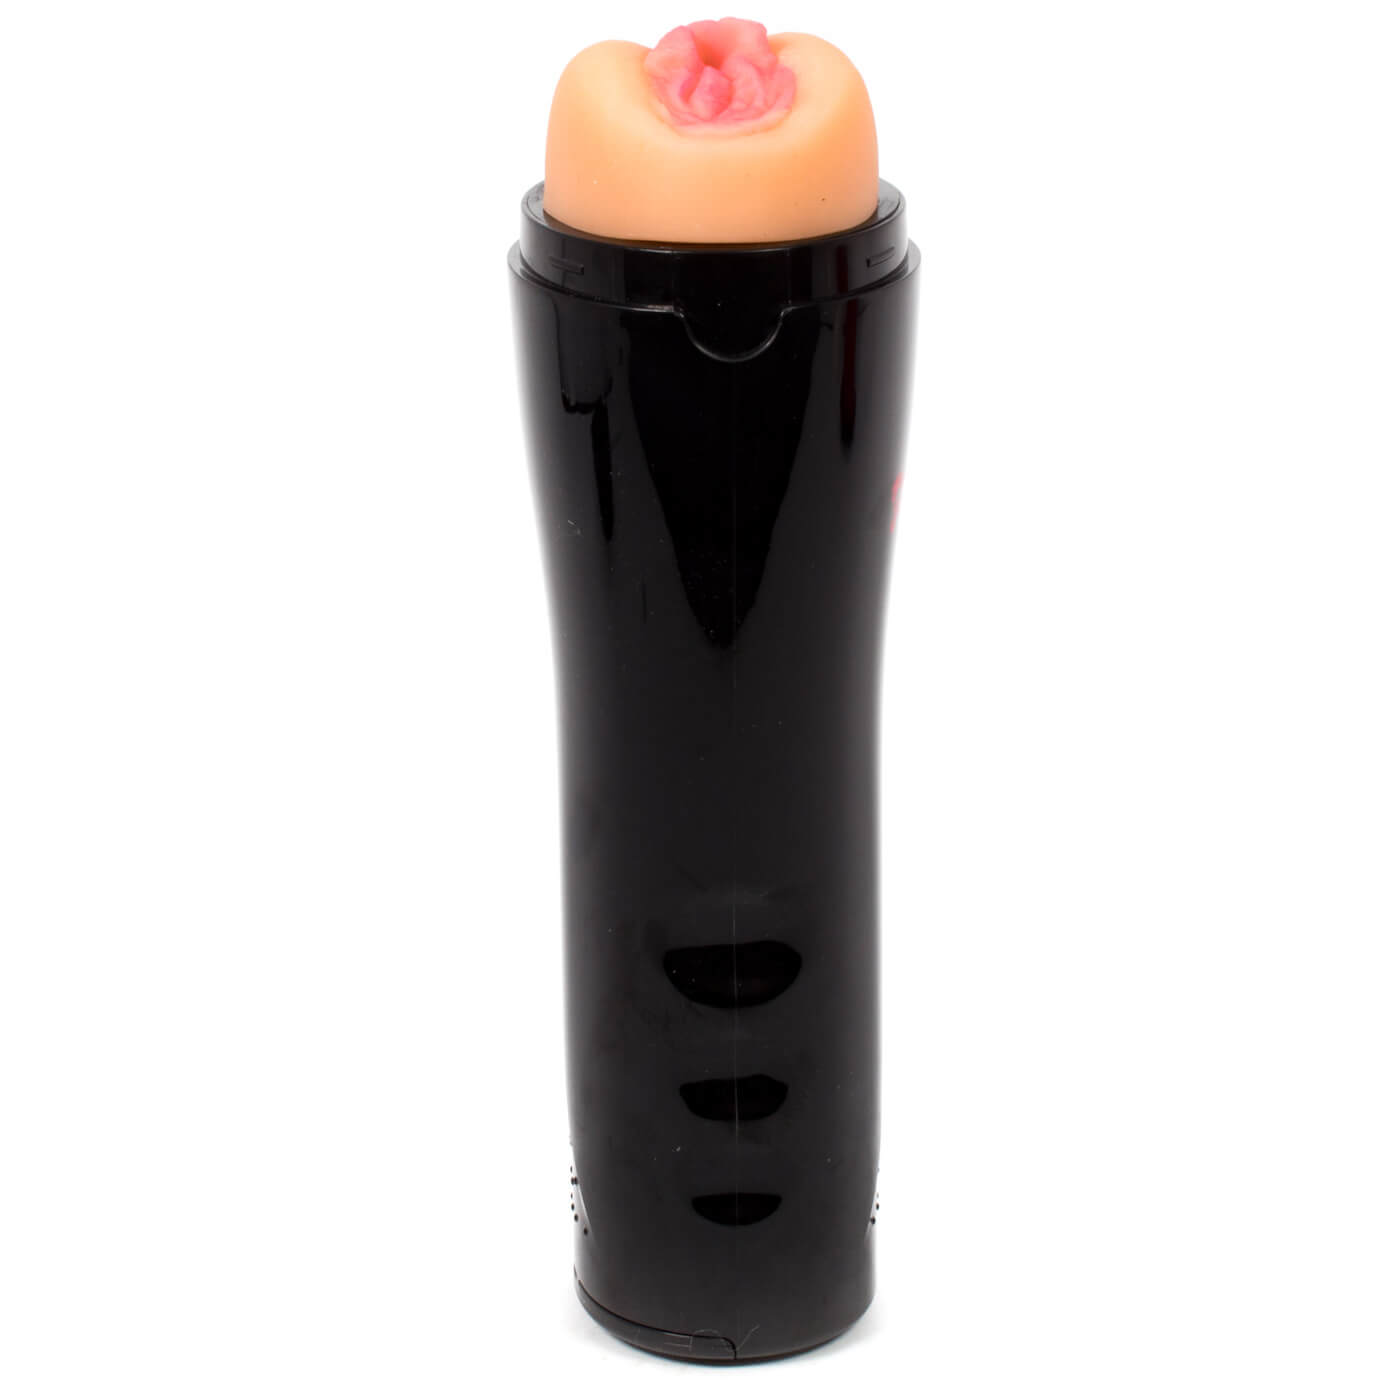 Cyberskin Celebrity Farrah's 6 Function Deluxe Vibrating Realistic Vagina Stroker